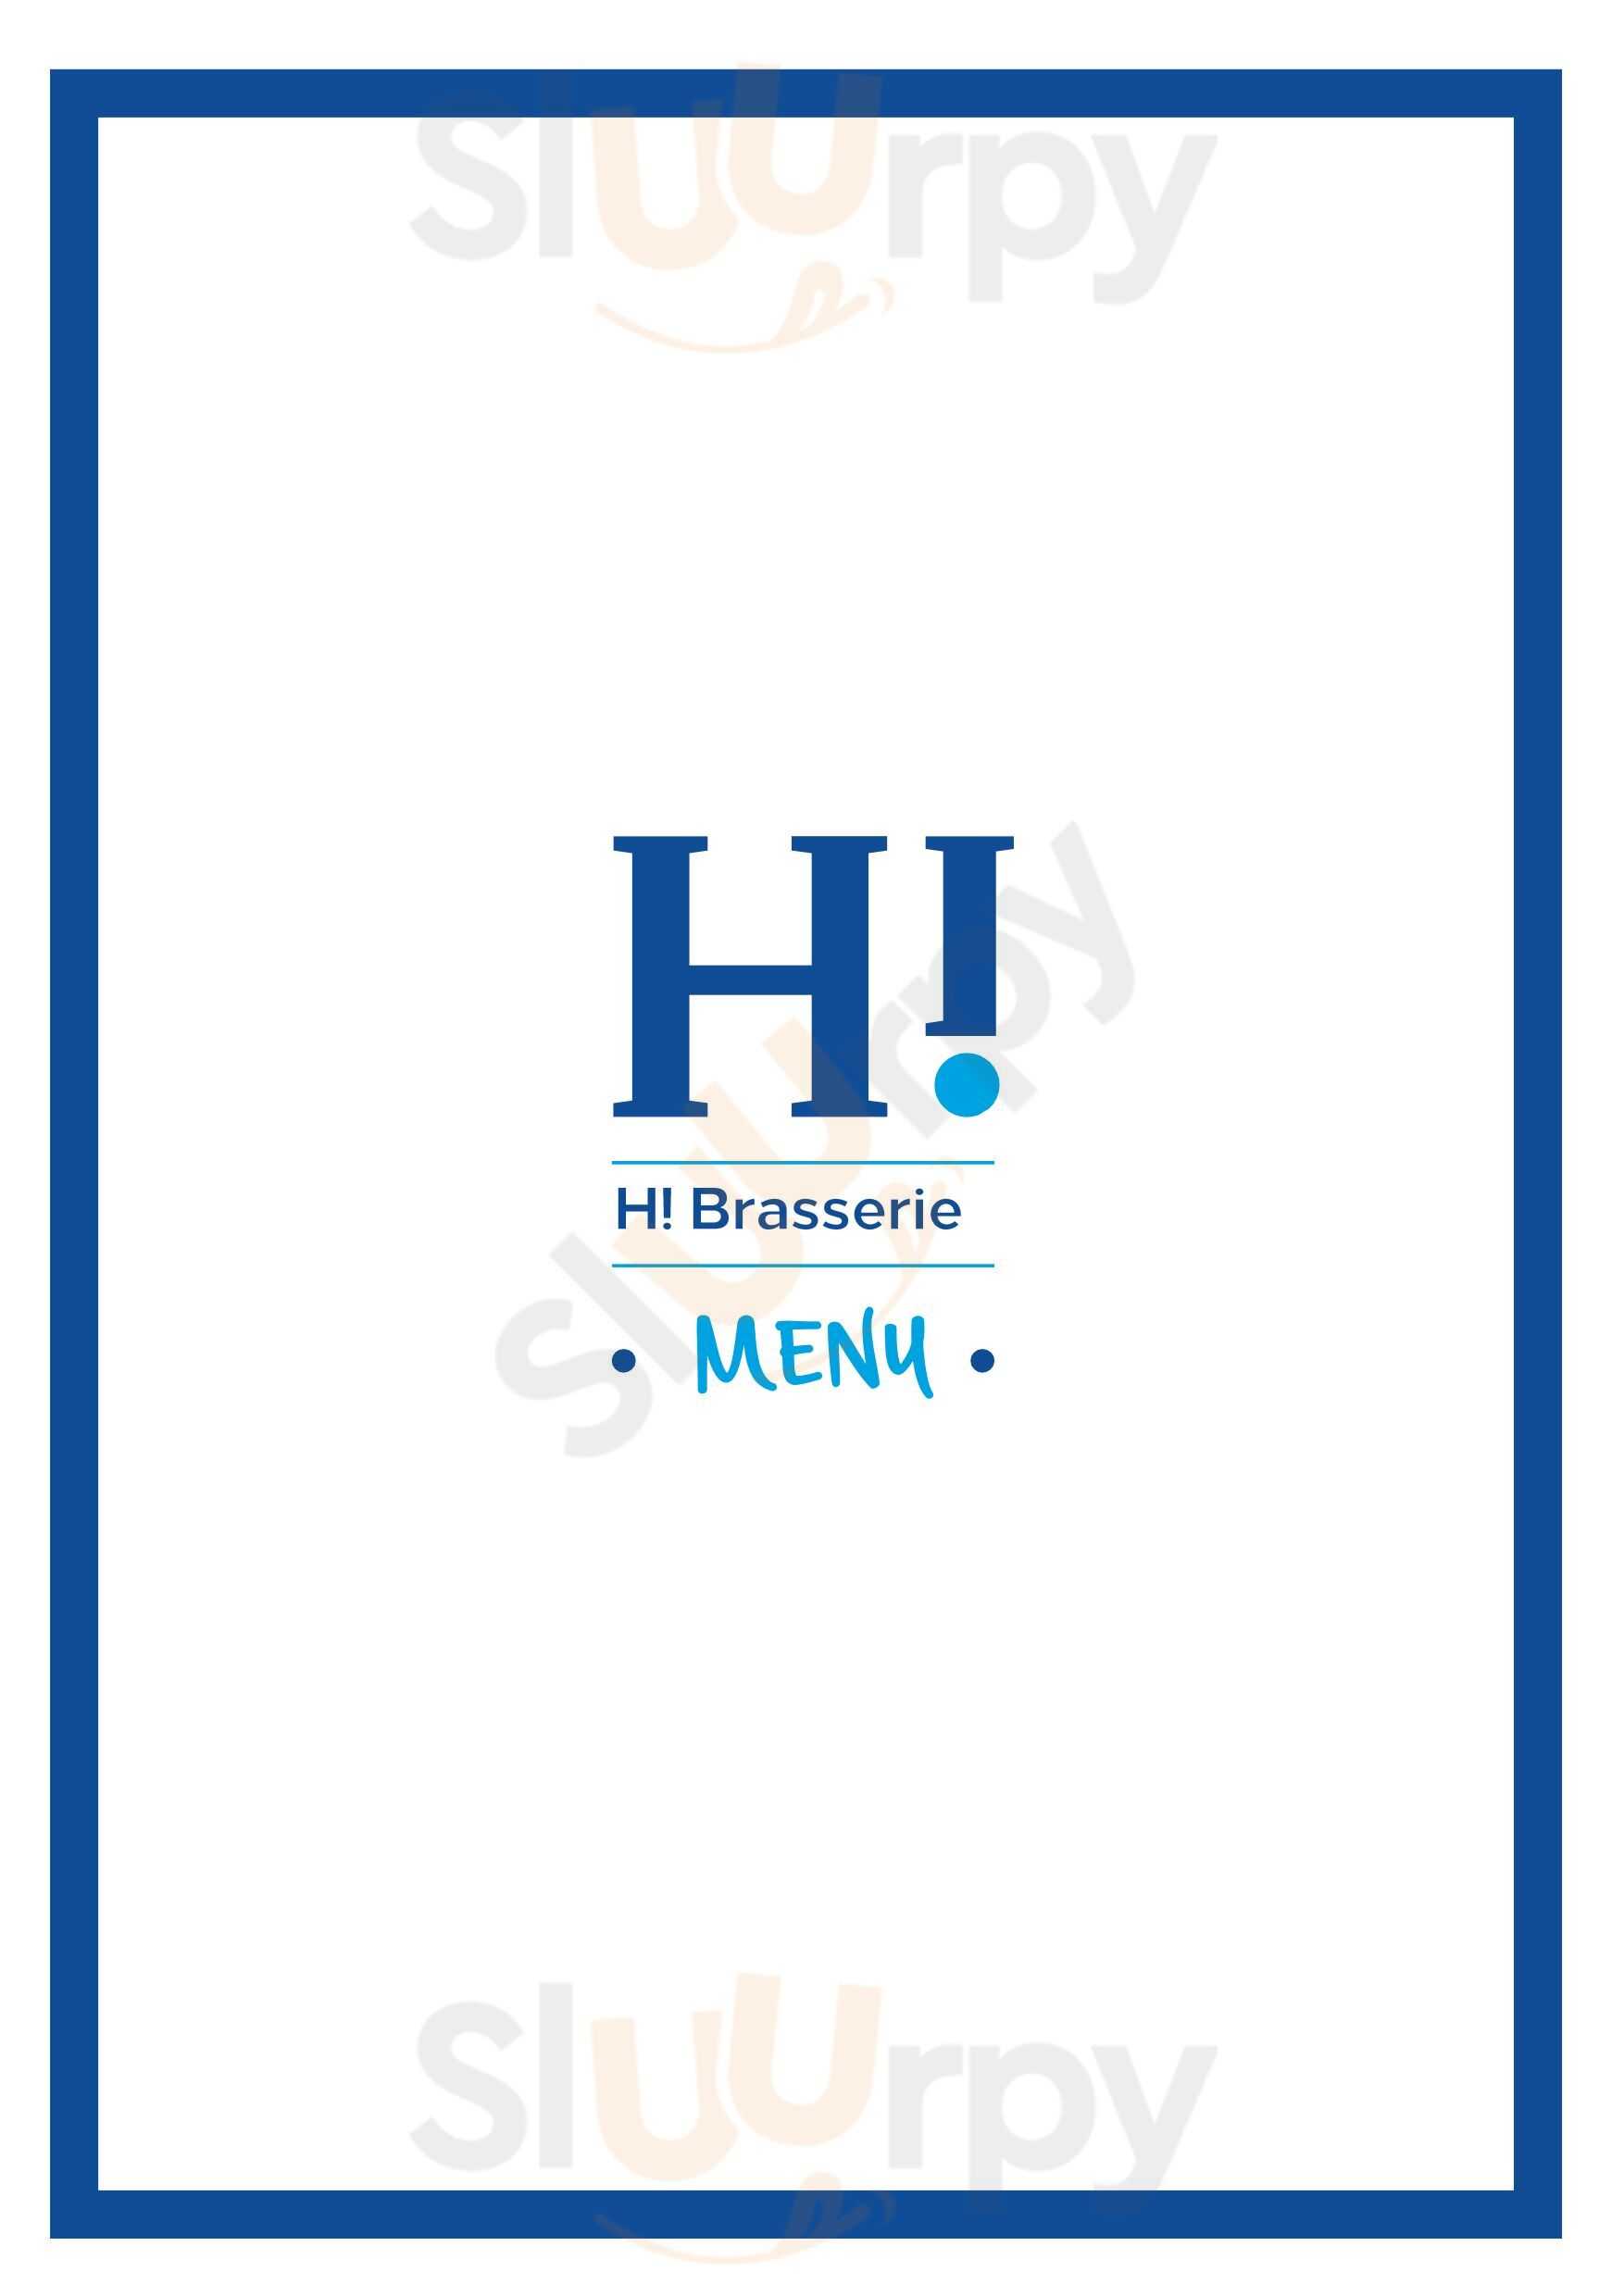 H! Brasserie Strasbourg Menu - 1